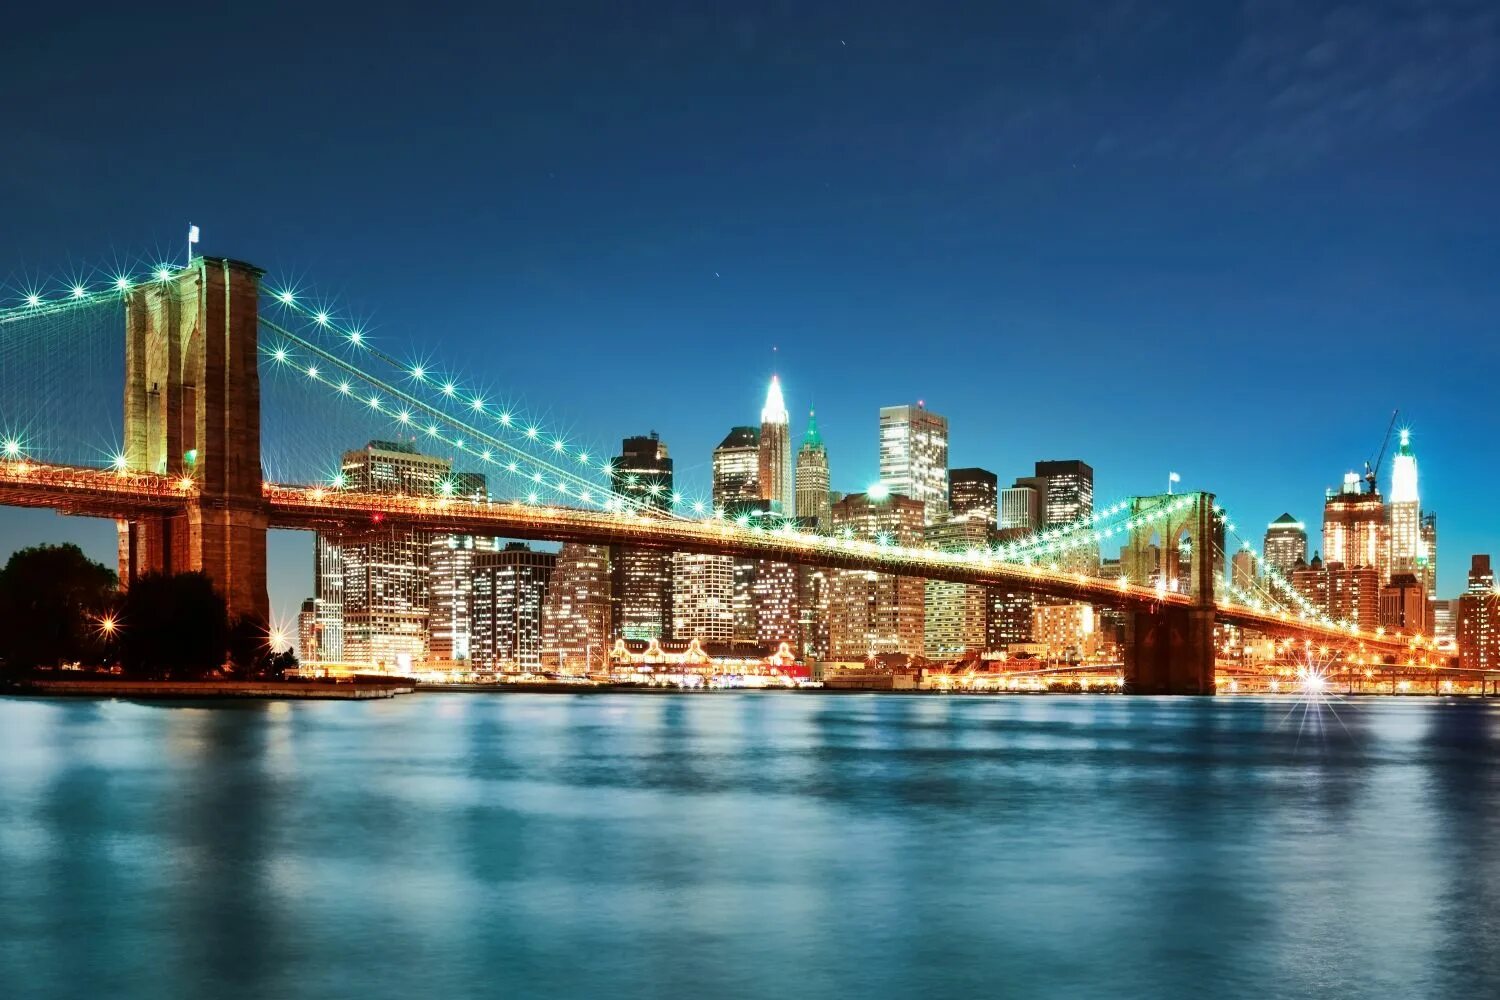 Бруклинский мост Нью-Йорк. Ночной Нью-Йорк Бруклинский мост. Бруклинский мост Нью-Йорк ночью. Бруклинский мост Нью-Йорк панорама. Купить большую картинку